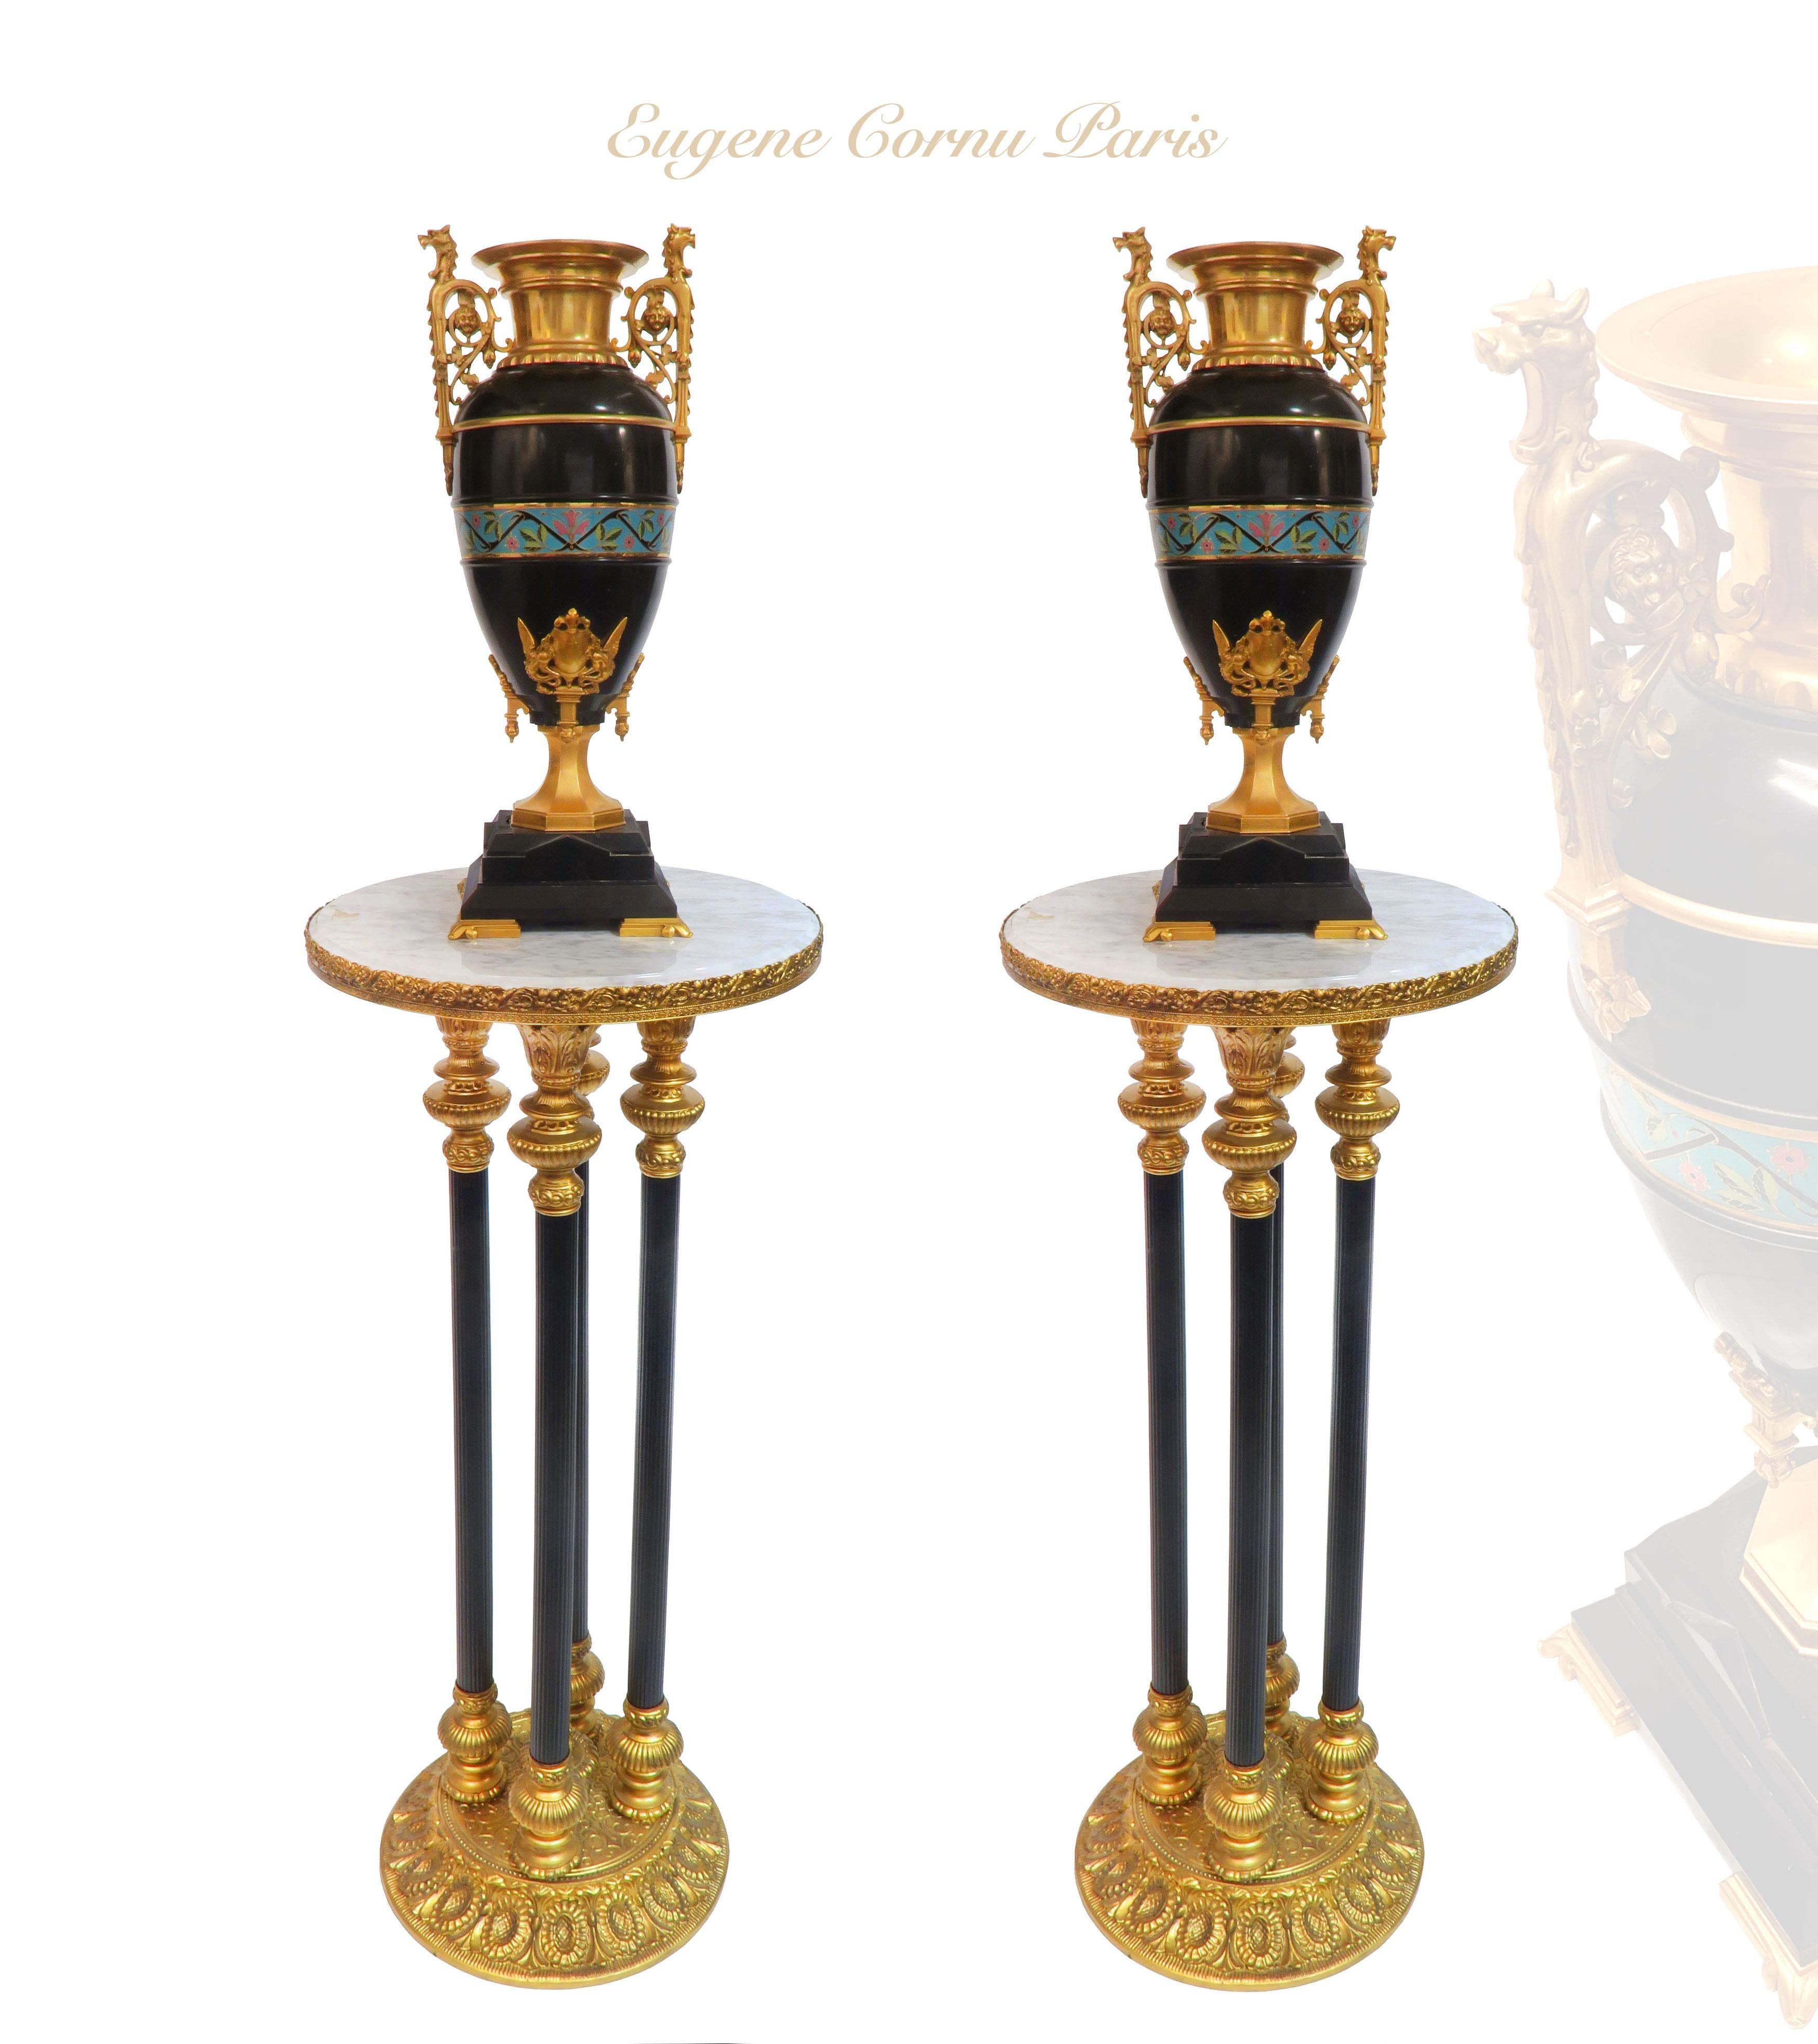 Pair of 19th C. French black marble & champleve enamel gilt bronze vases By Eugene Cornu.

D: 18